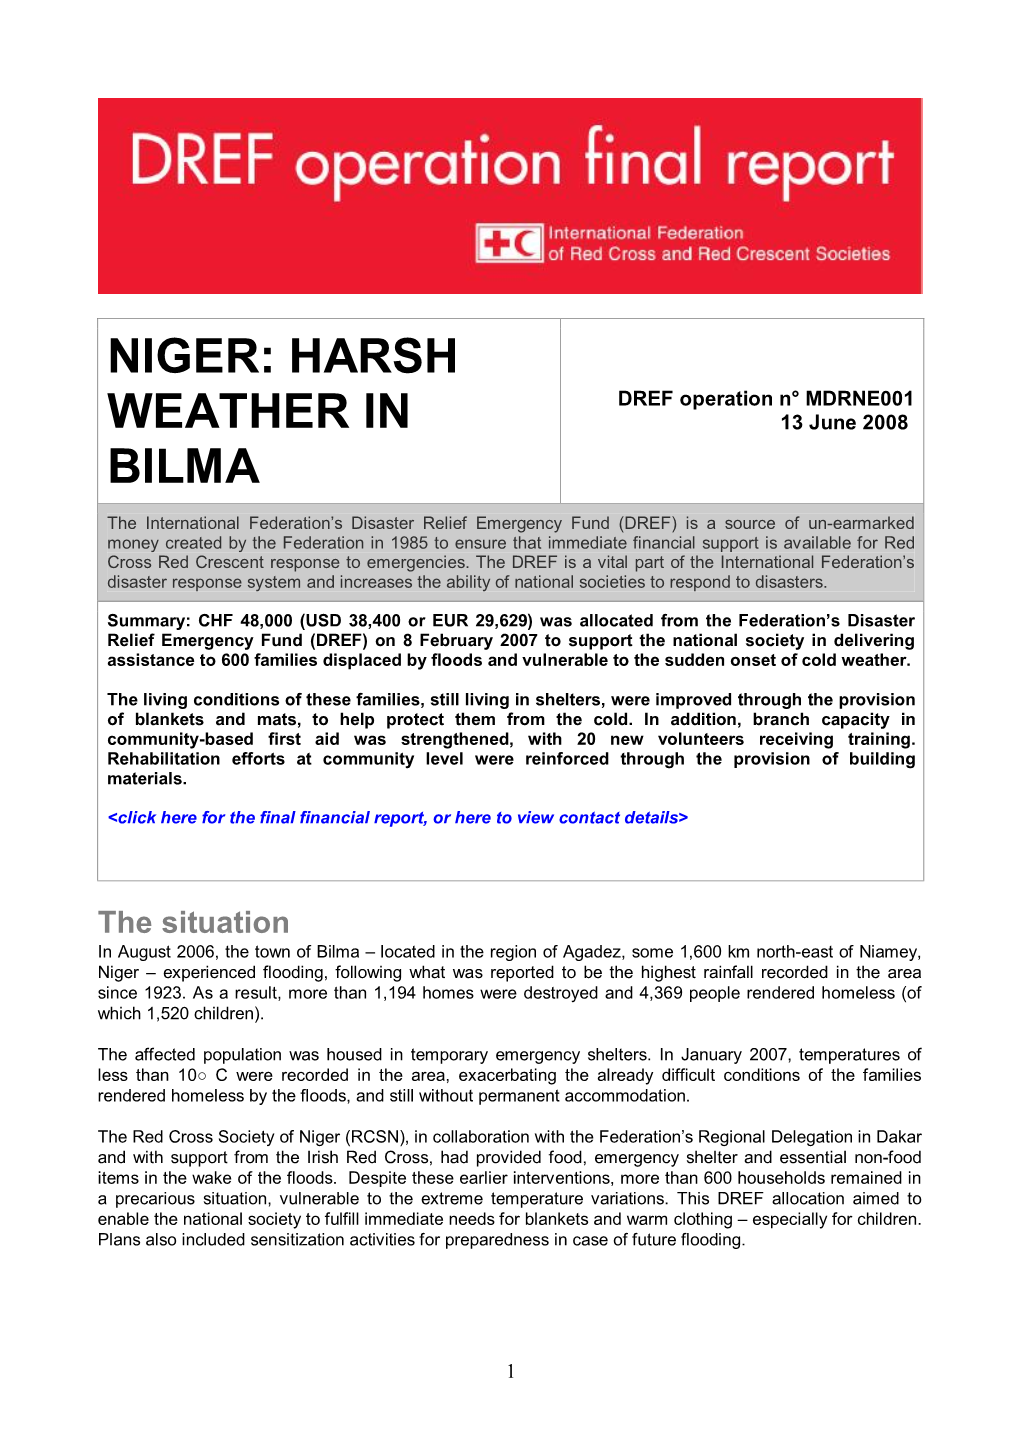 Niger: Harsh Weather in Bilma